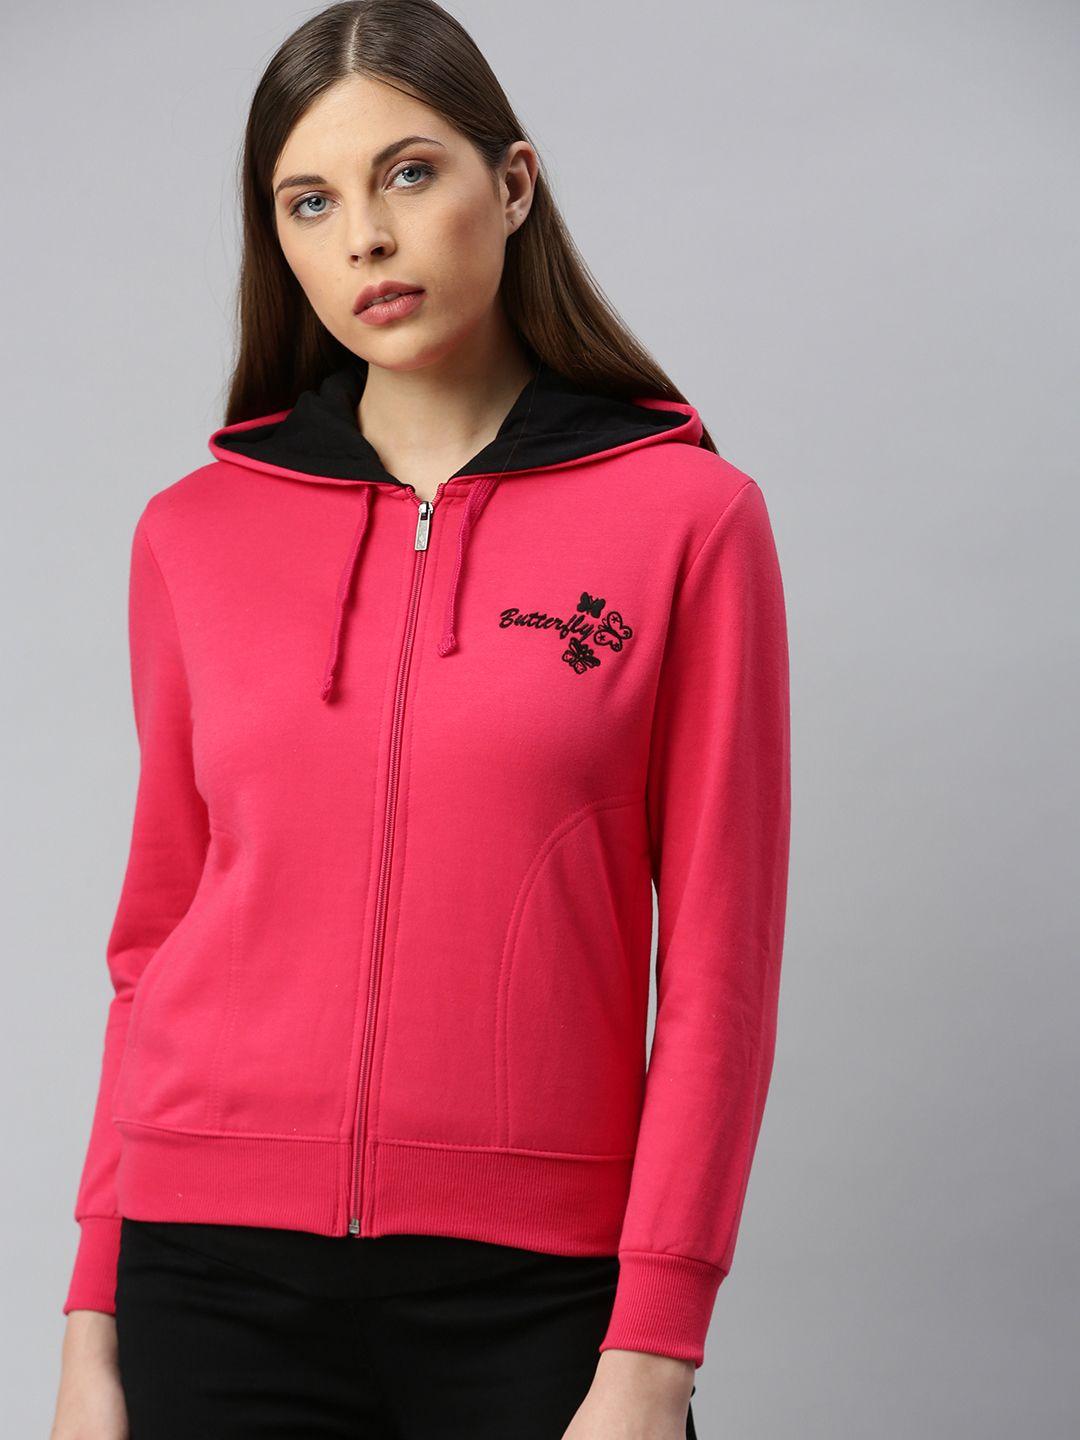 adbucks women pink solid hooded sweatshirt